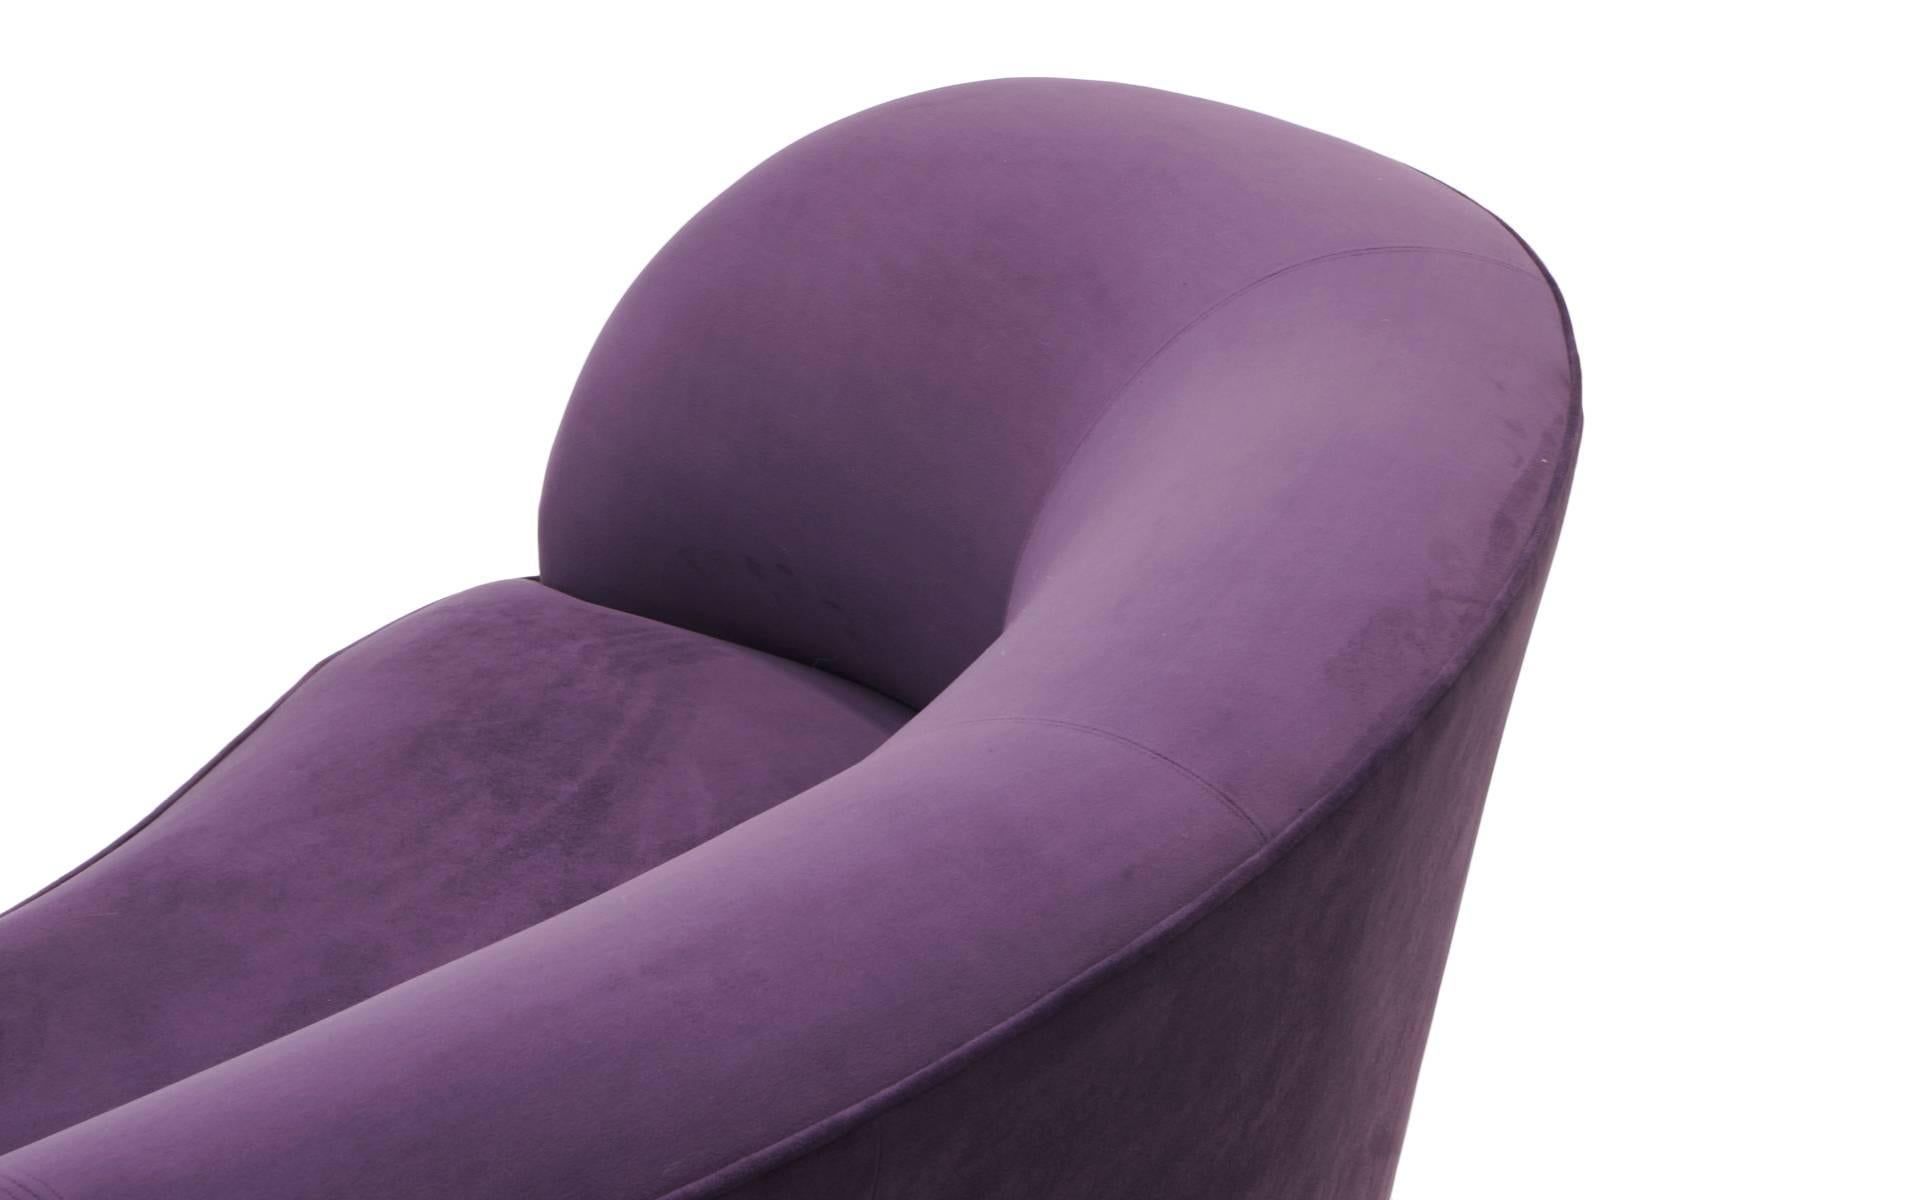 Mid-20th Century Vladimir Kagan Cloud Sofas, Pair of Newly Upholstered in Purple/Plum Ultrasuede